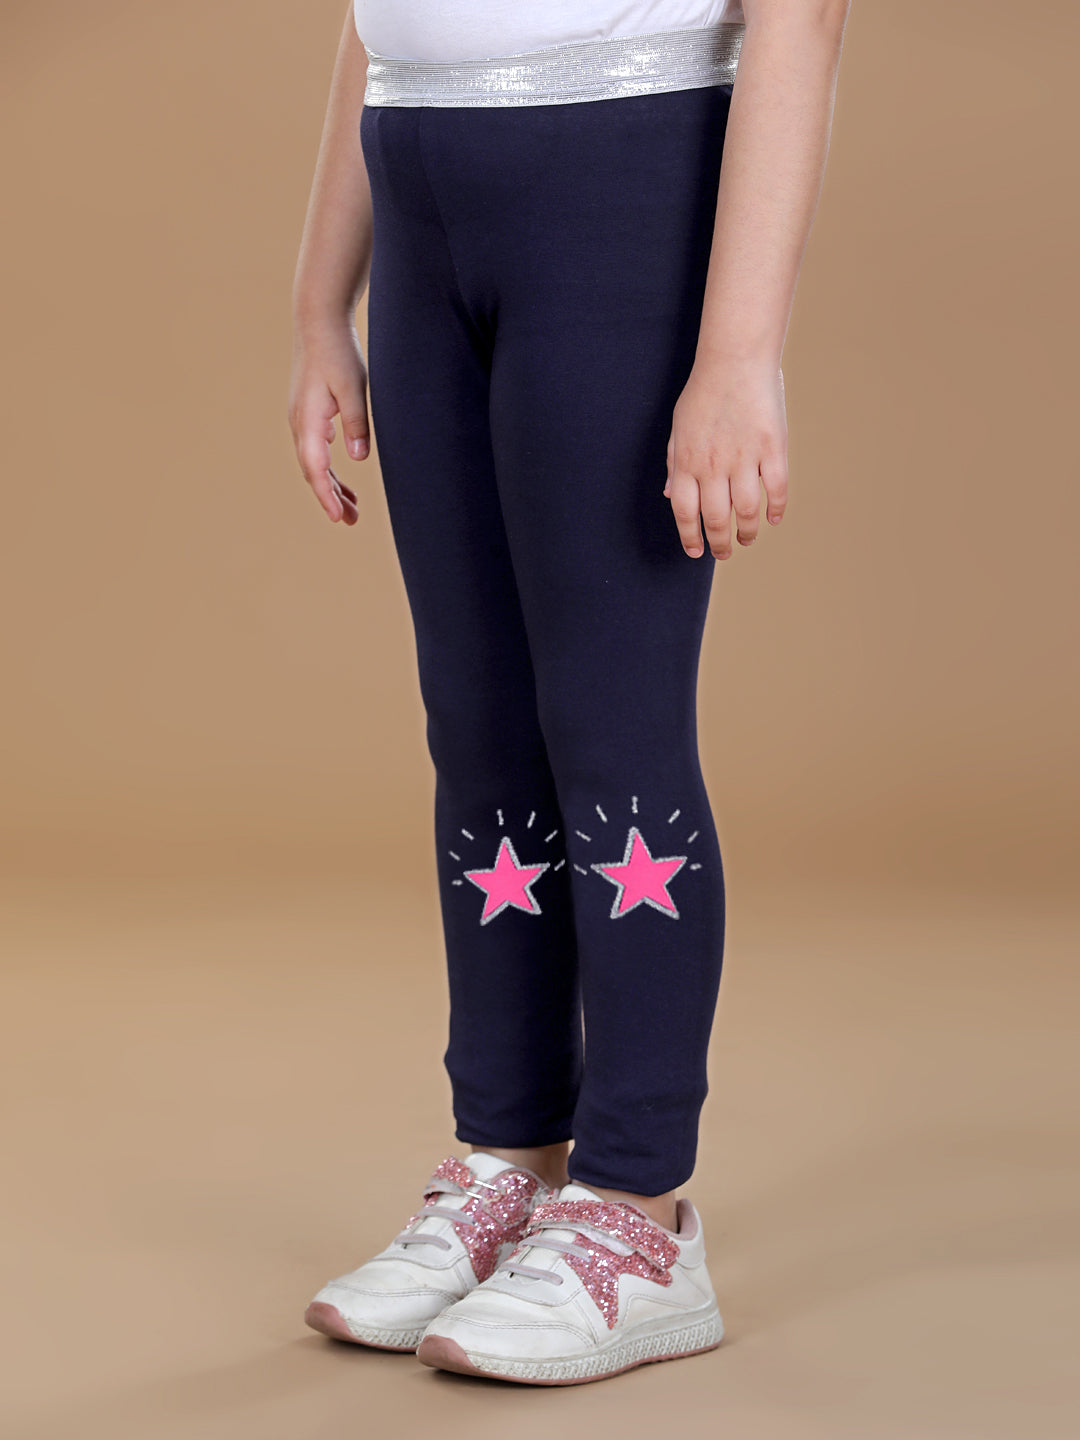 Girls Silver Elasticated Waistband & Star Printed Navy Leggings